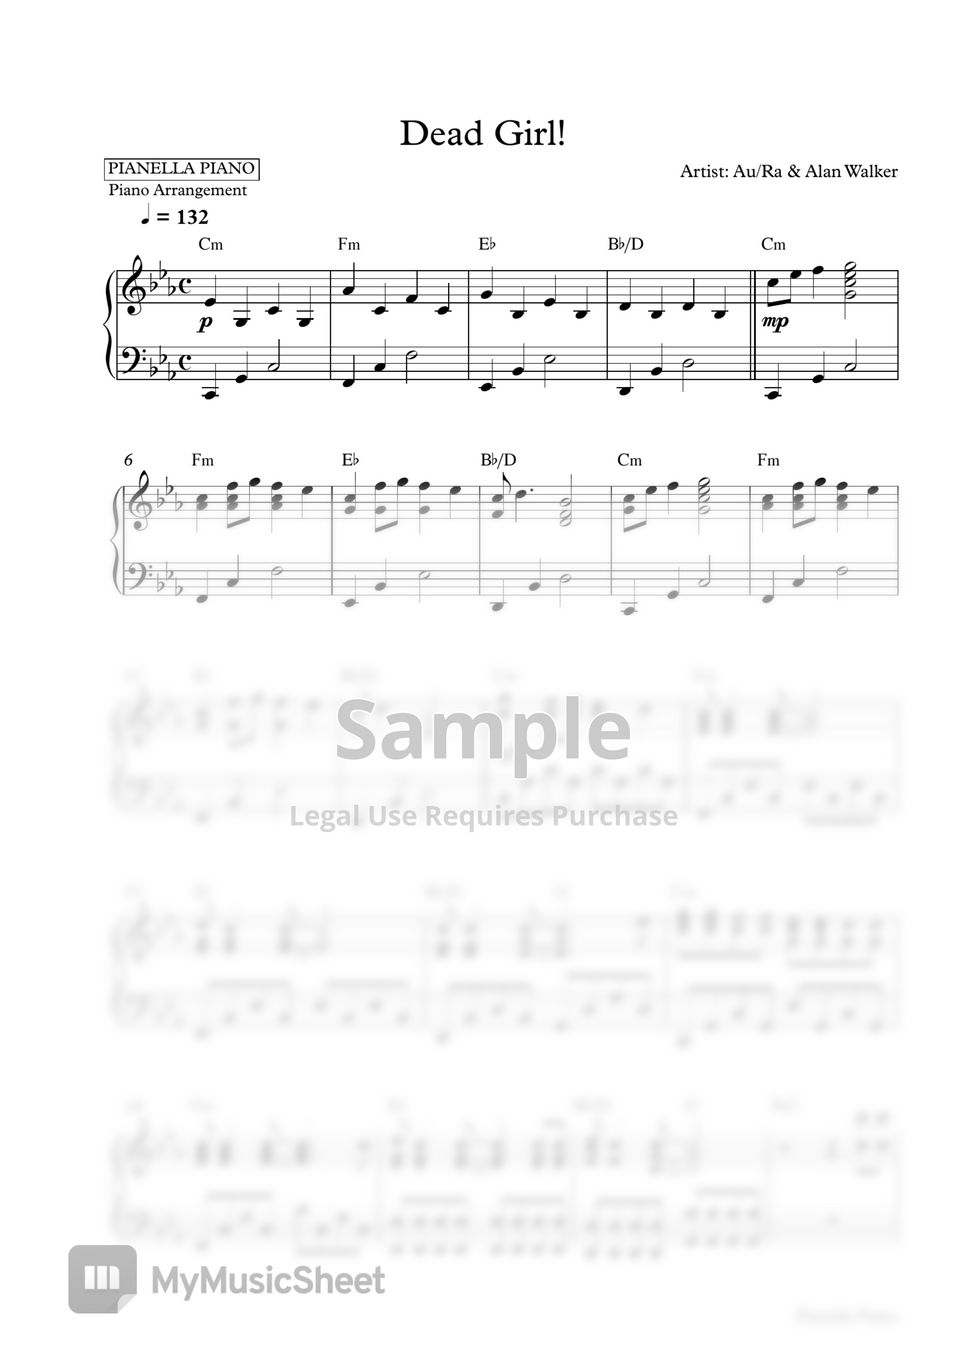 Au/Ra & Alan Walker - Dead Girl! (Piano Sheet) by Pianella Piano